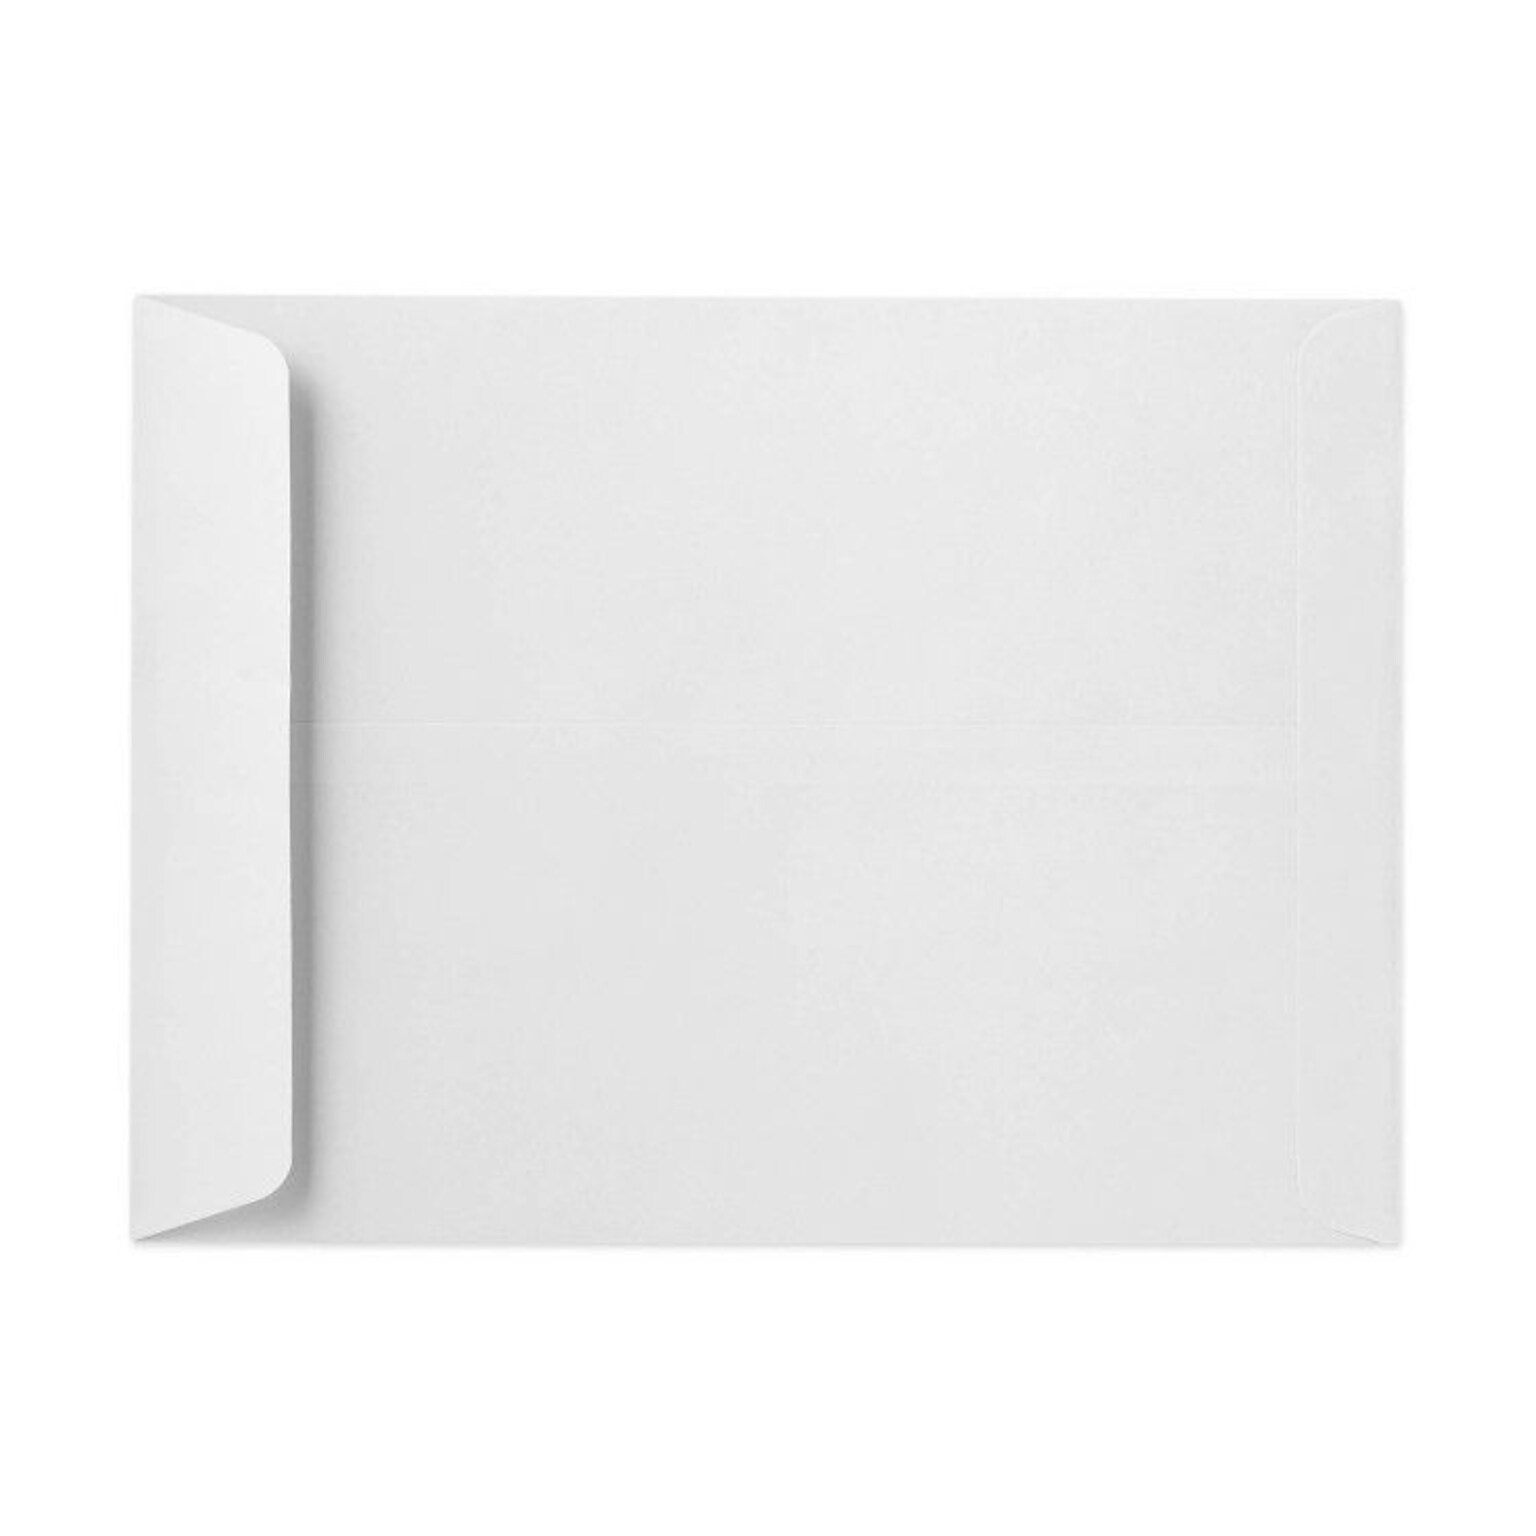 LUX 28lbs. 11 x 17 Open End Flap Jumbo Envelopes, Bright White, 1000/BX